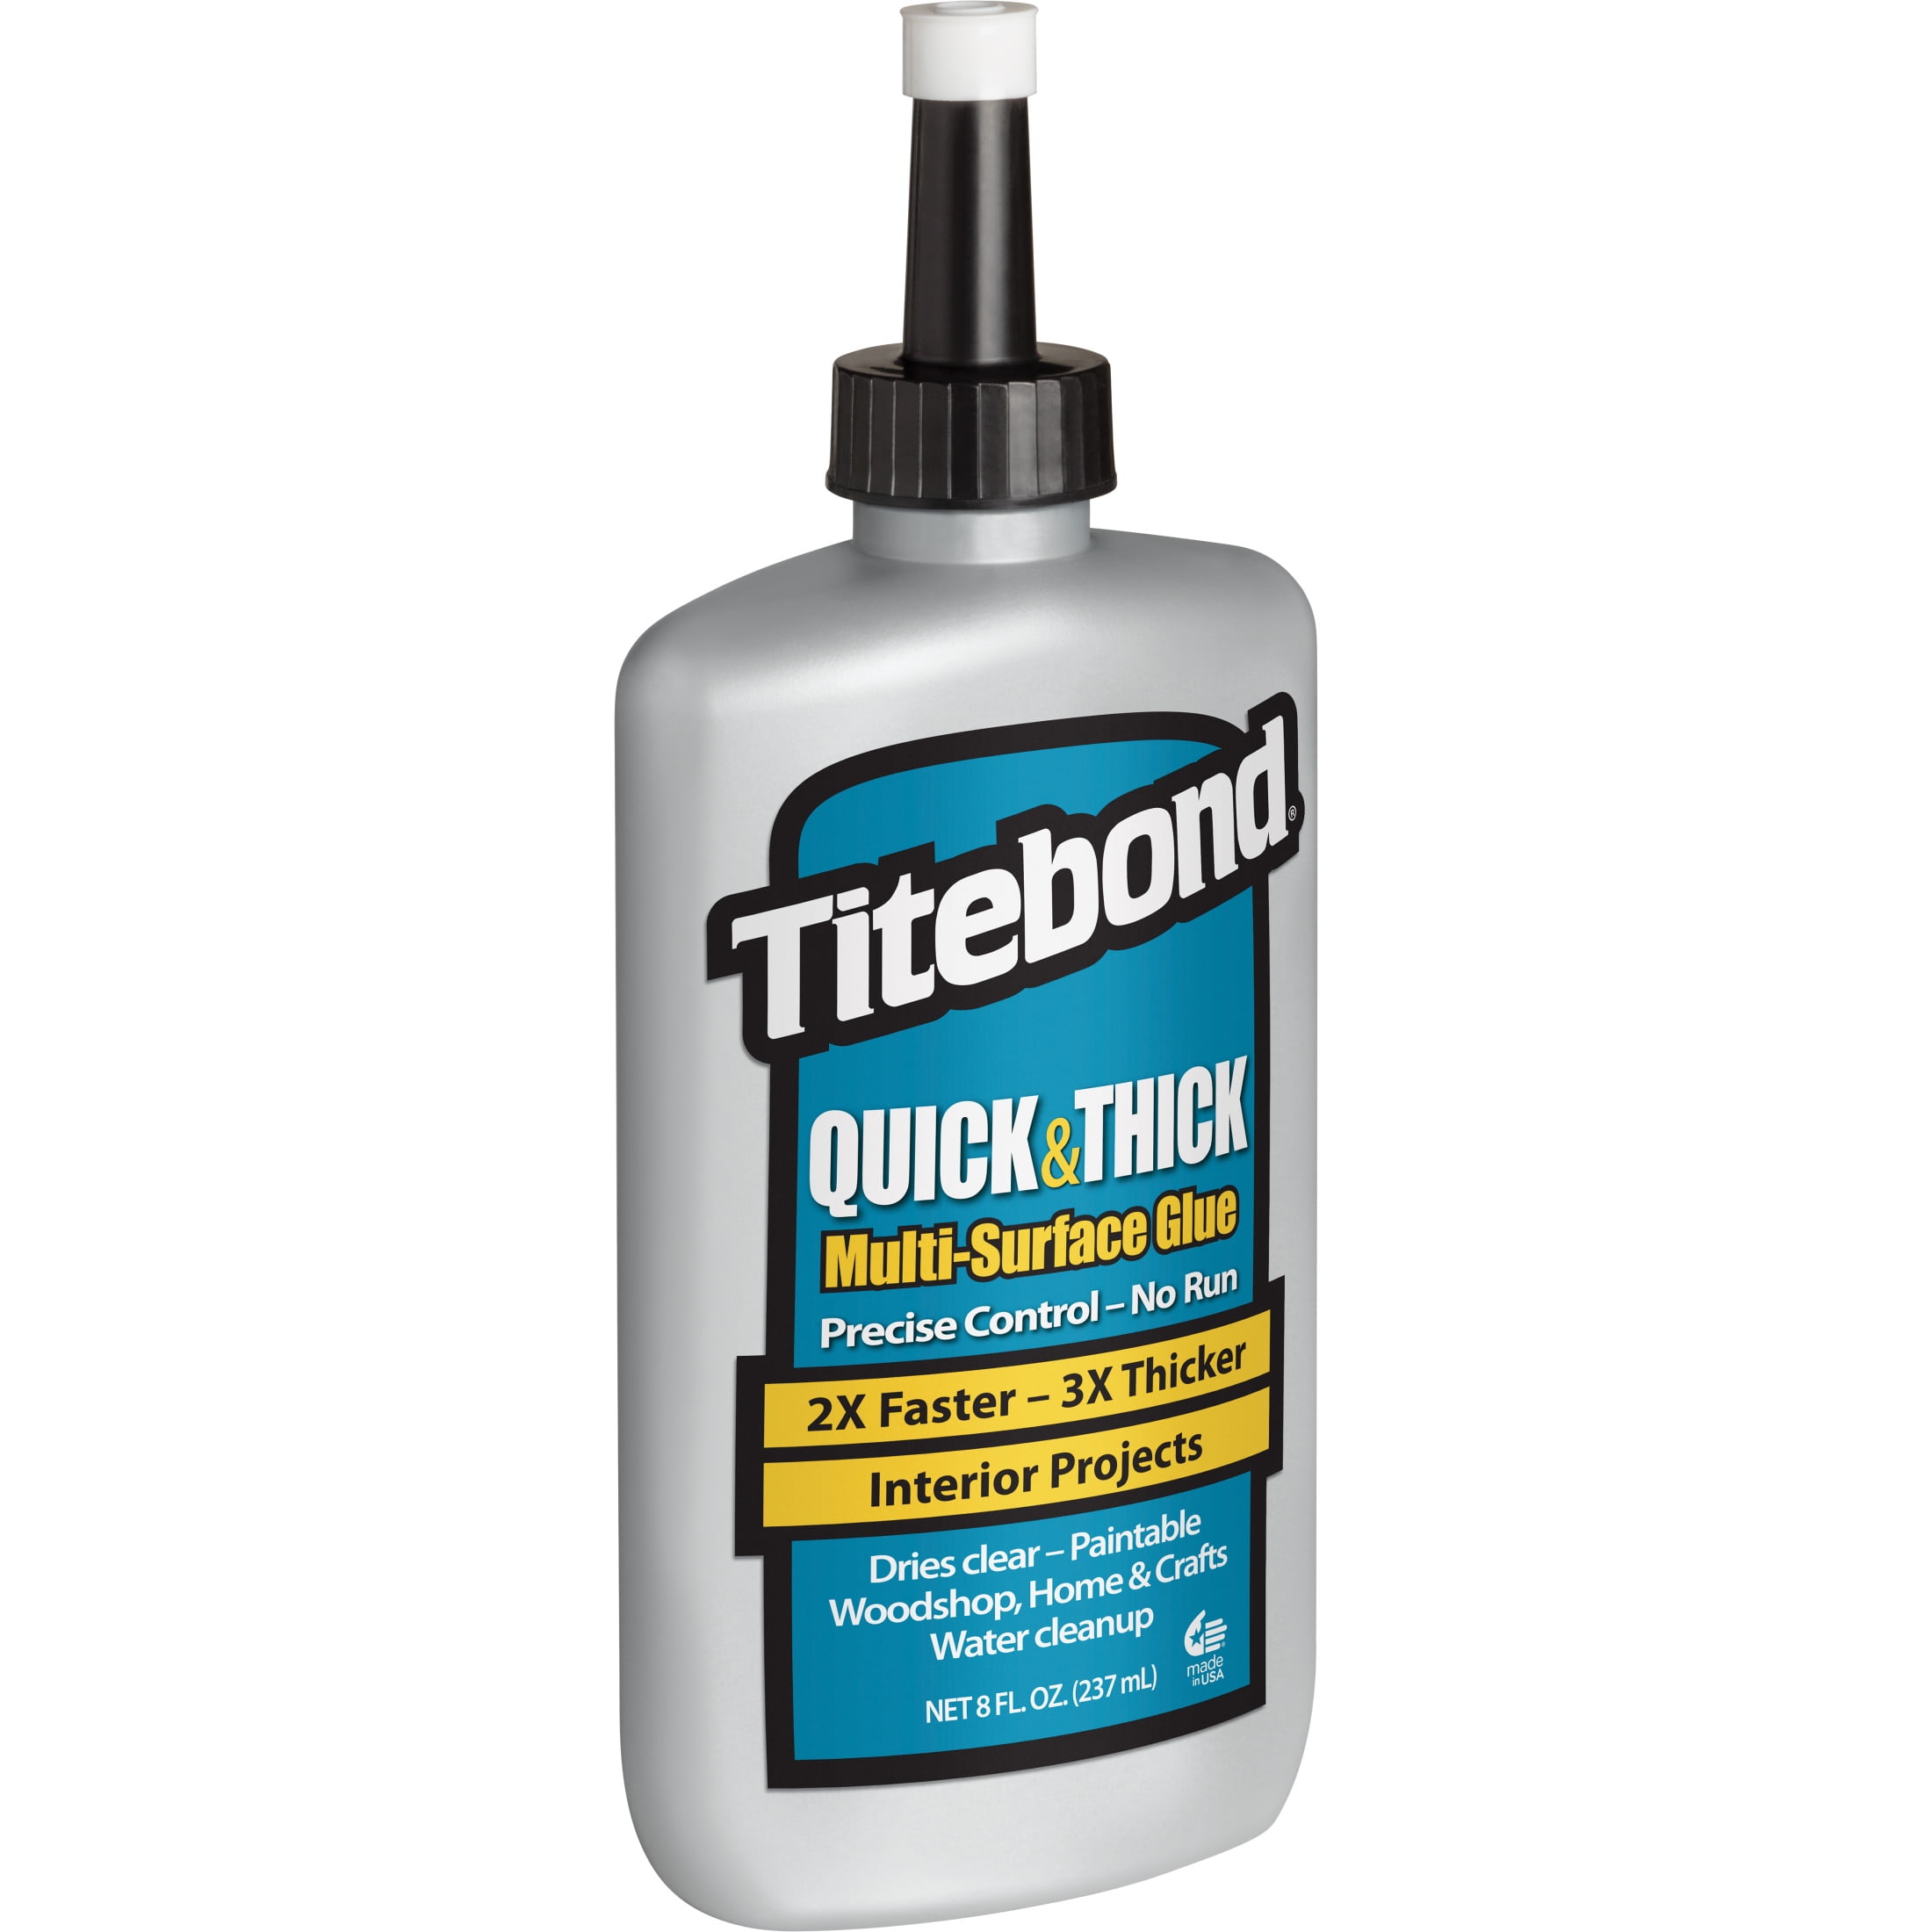 Titebond Quick & Thick Wood Glue - 8 oz